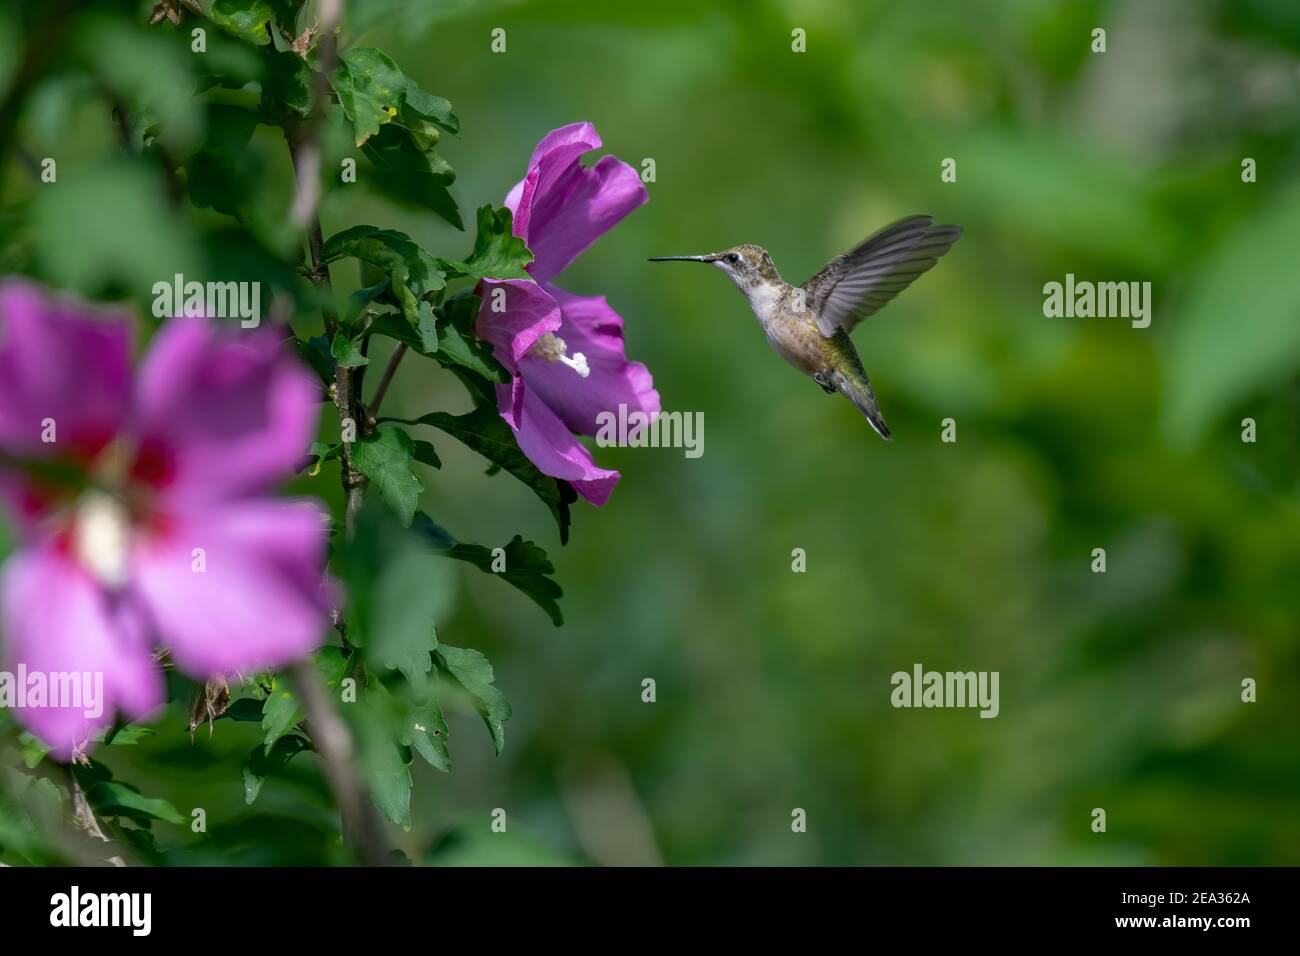 A Beautiful Ruby Throated Hummingbird feeding on a Wild Flower Stock Photo